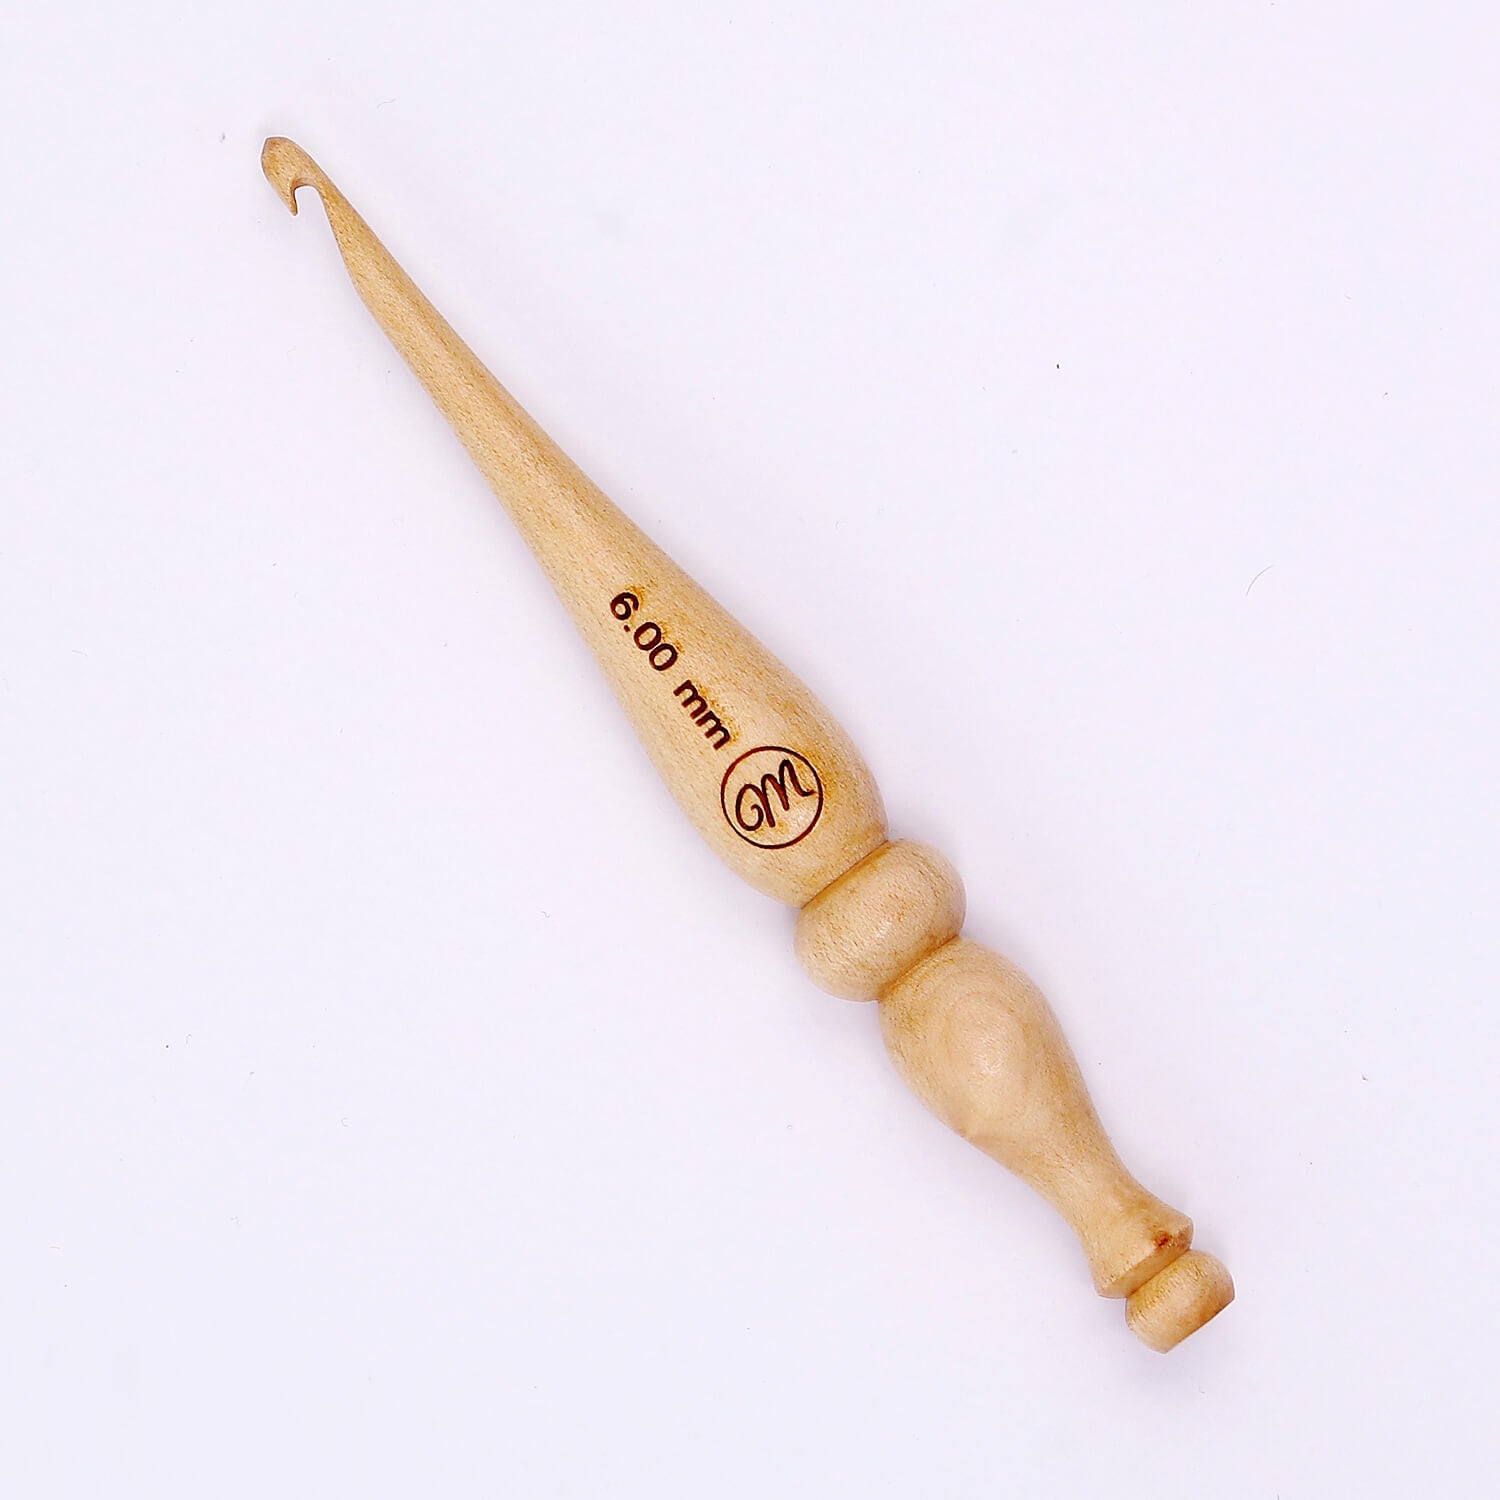 Ergonomic Maple Wood Crochet Hook - 6 mm